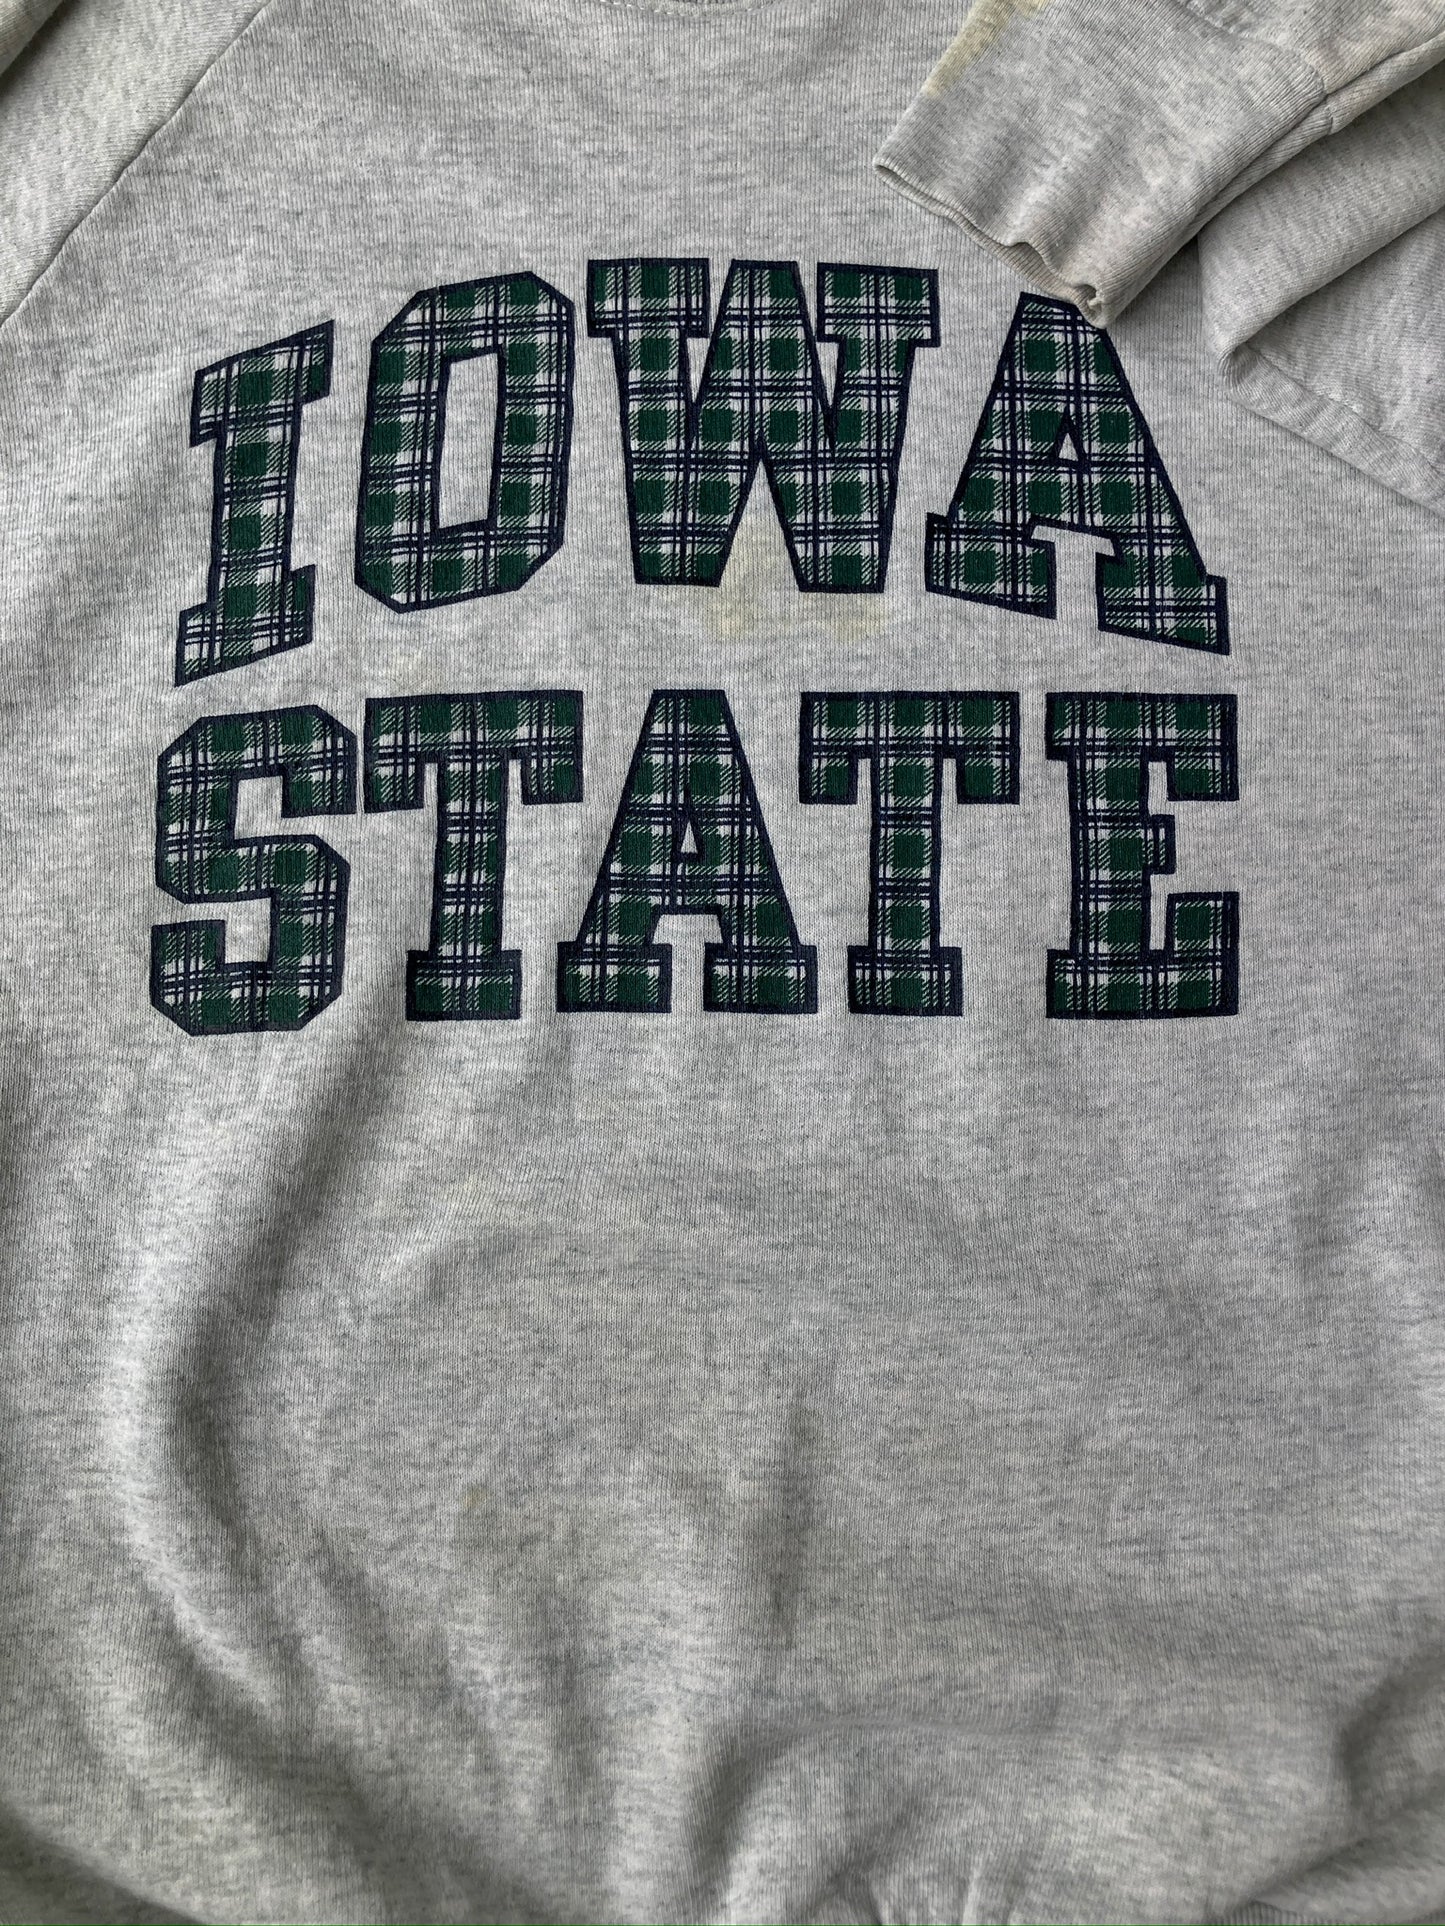 Iowa State Sweatshirt 80's - Large / XL